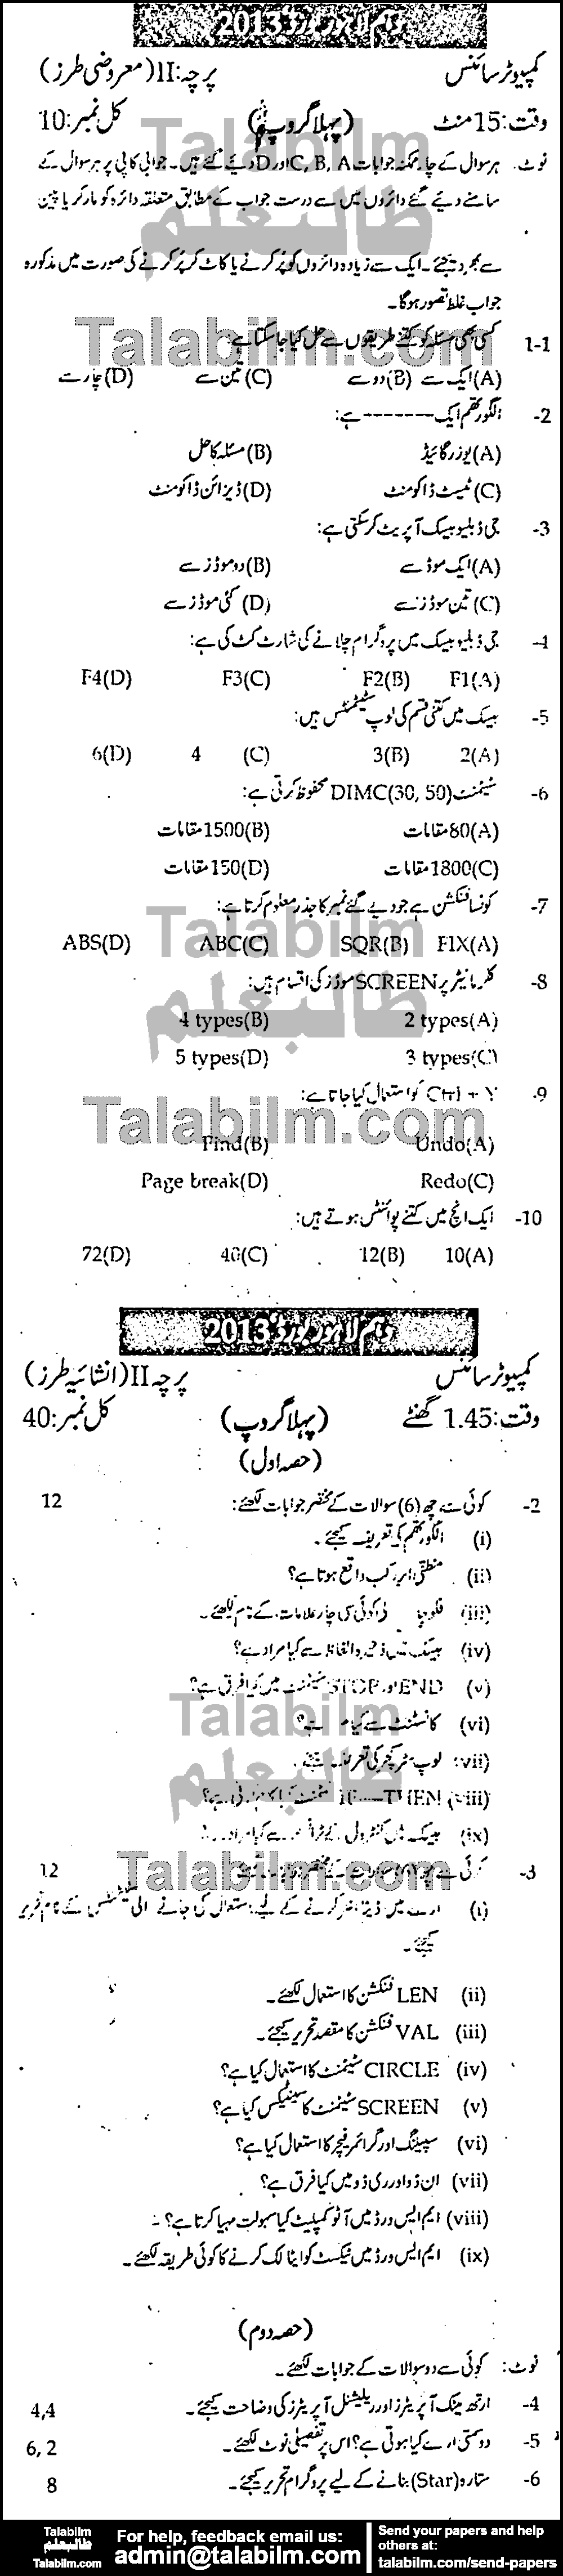 Computer Science 0 past paper for Urdu Medium 2013 Group-I